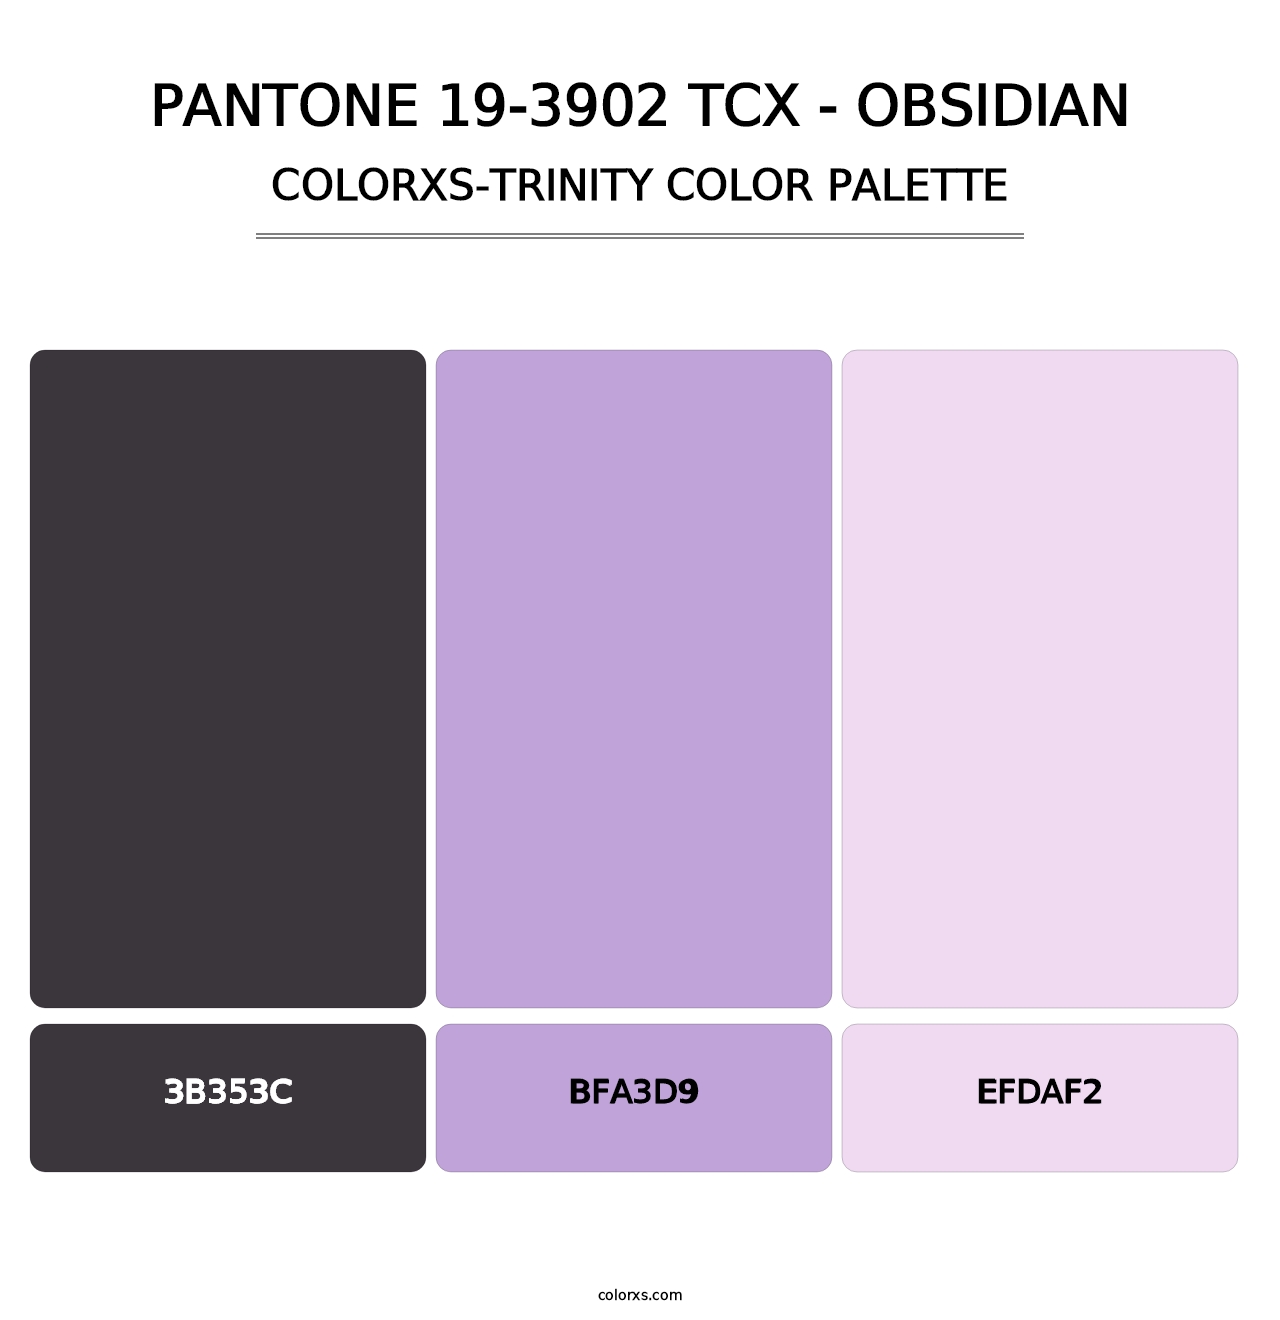 PANTONE 19-3902 TCX - Obsidian - Colorxs Trinity Palette